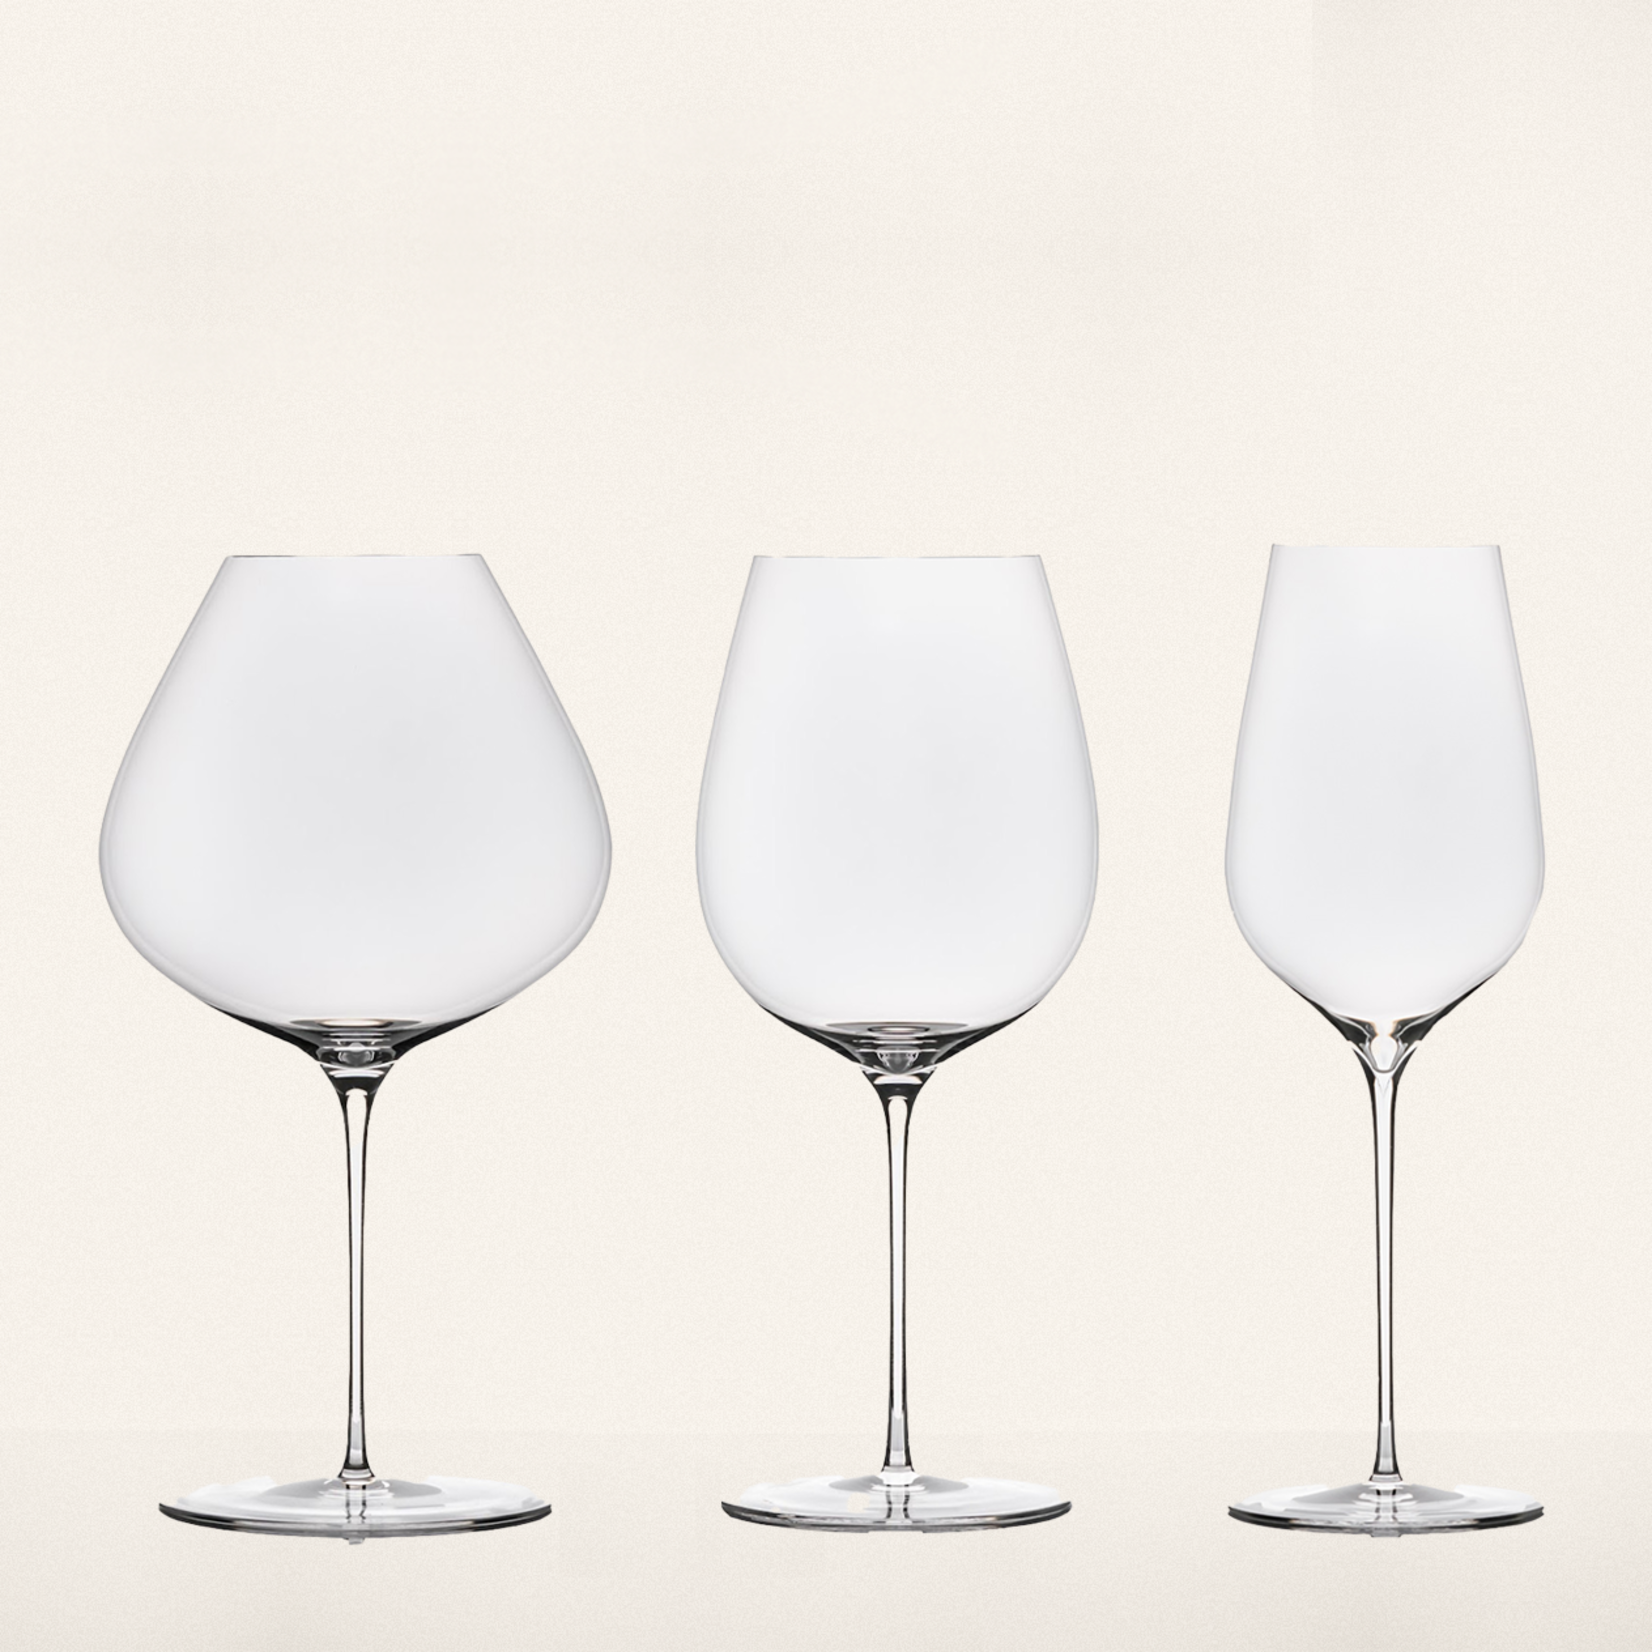 Sydonios Meridional - set of 2 glasses